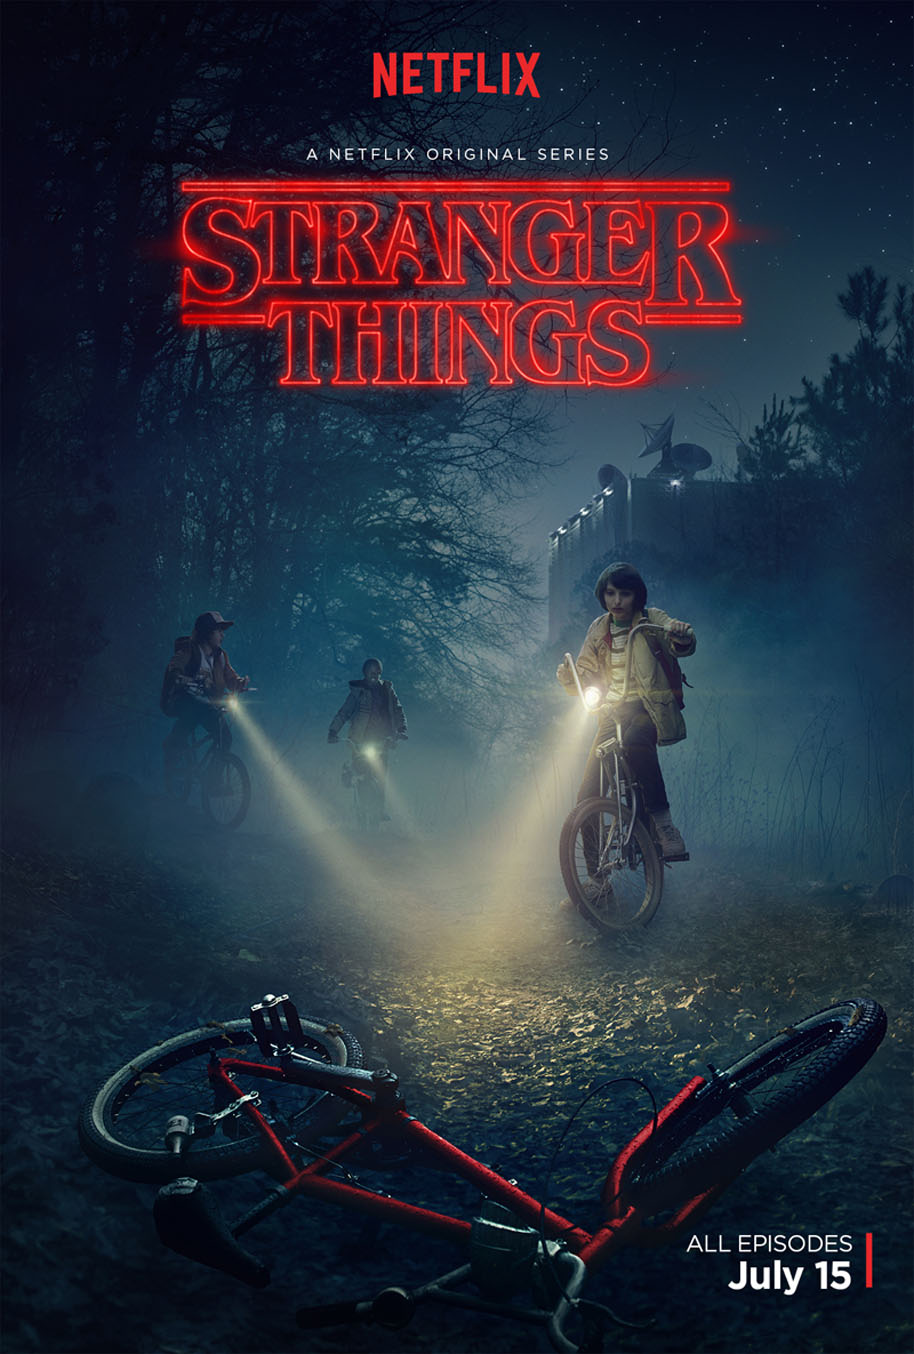 Stranger Things review: More than a glorious nostalgia trip?